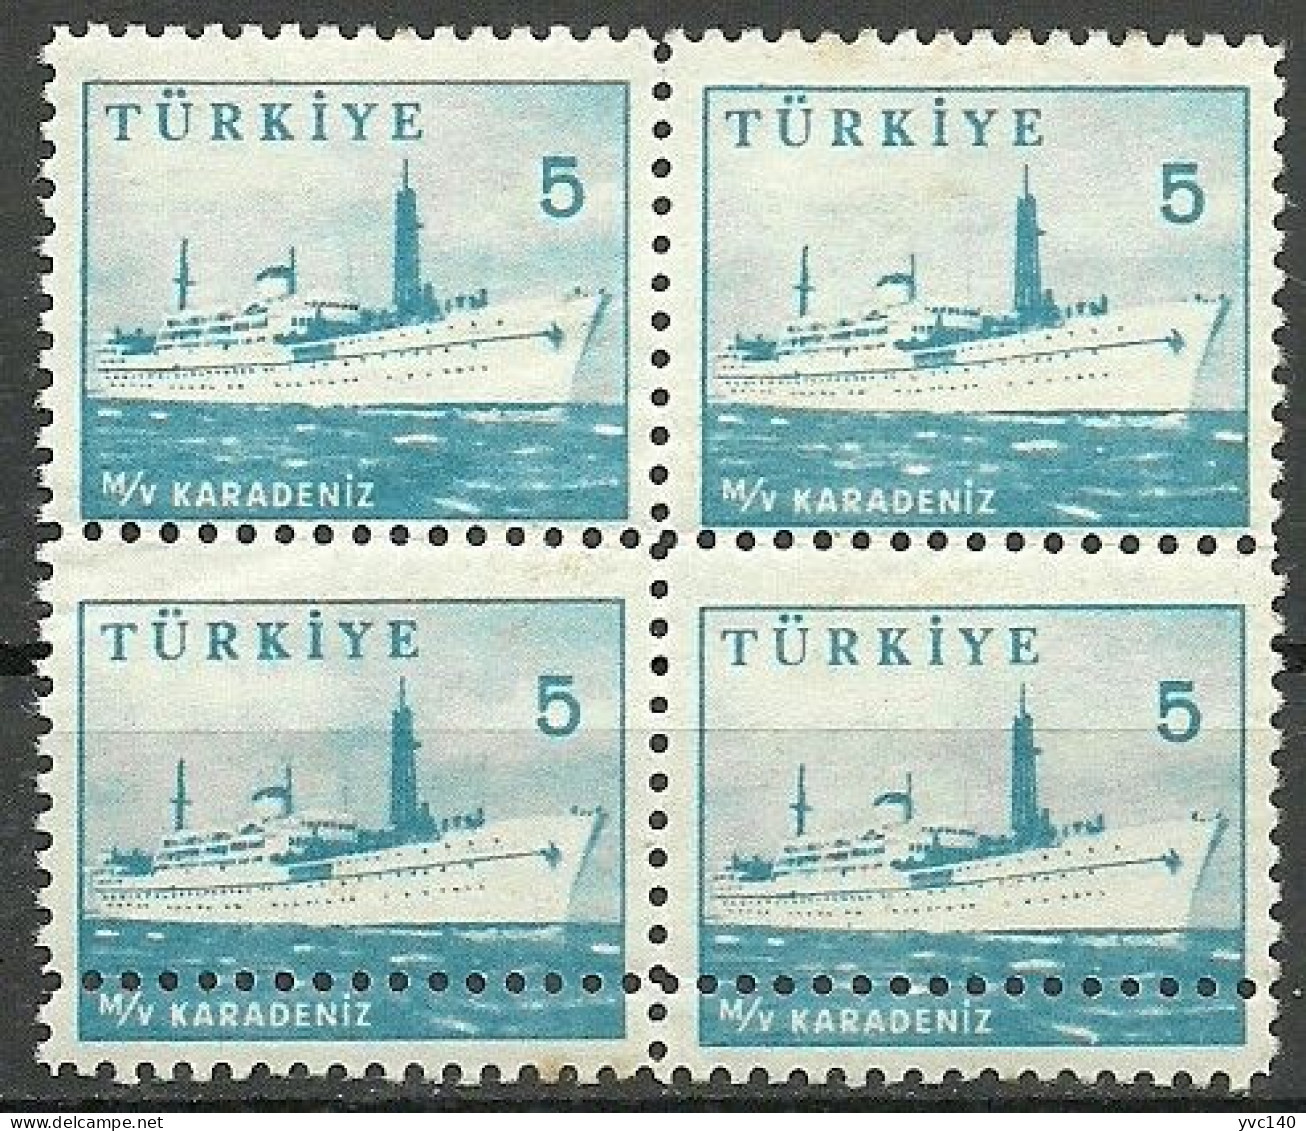 Turkey; 1959 Pictorial Postage Stamp 5 K. ERROR "Doouuble Perf." - Neufs